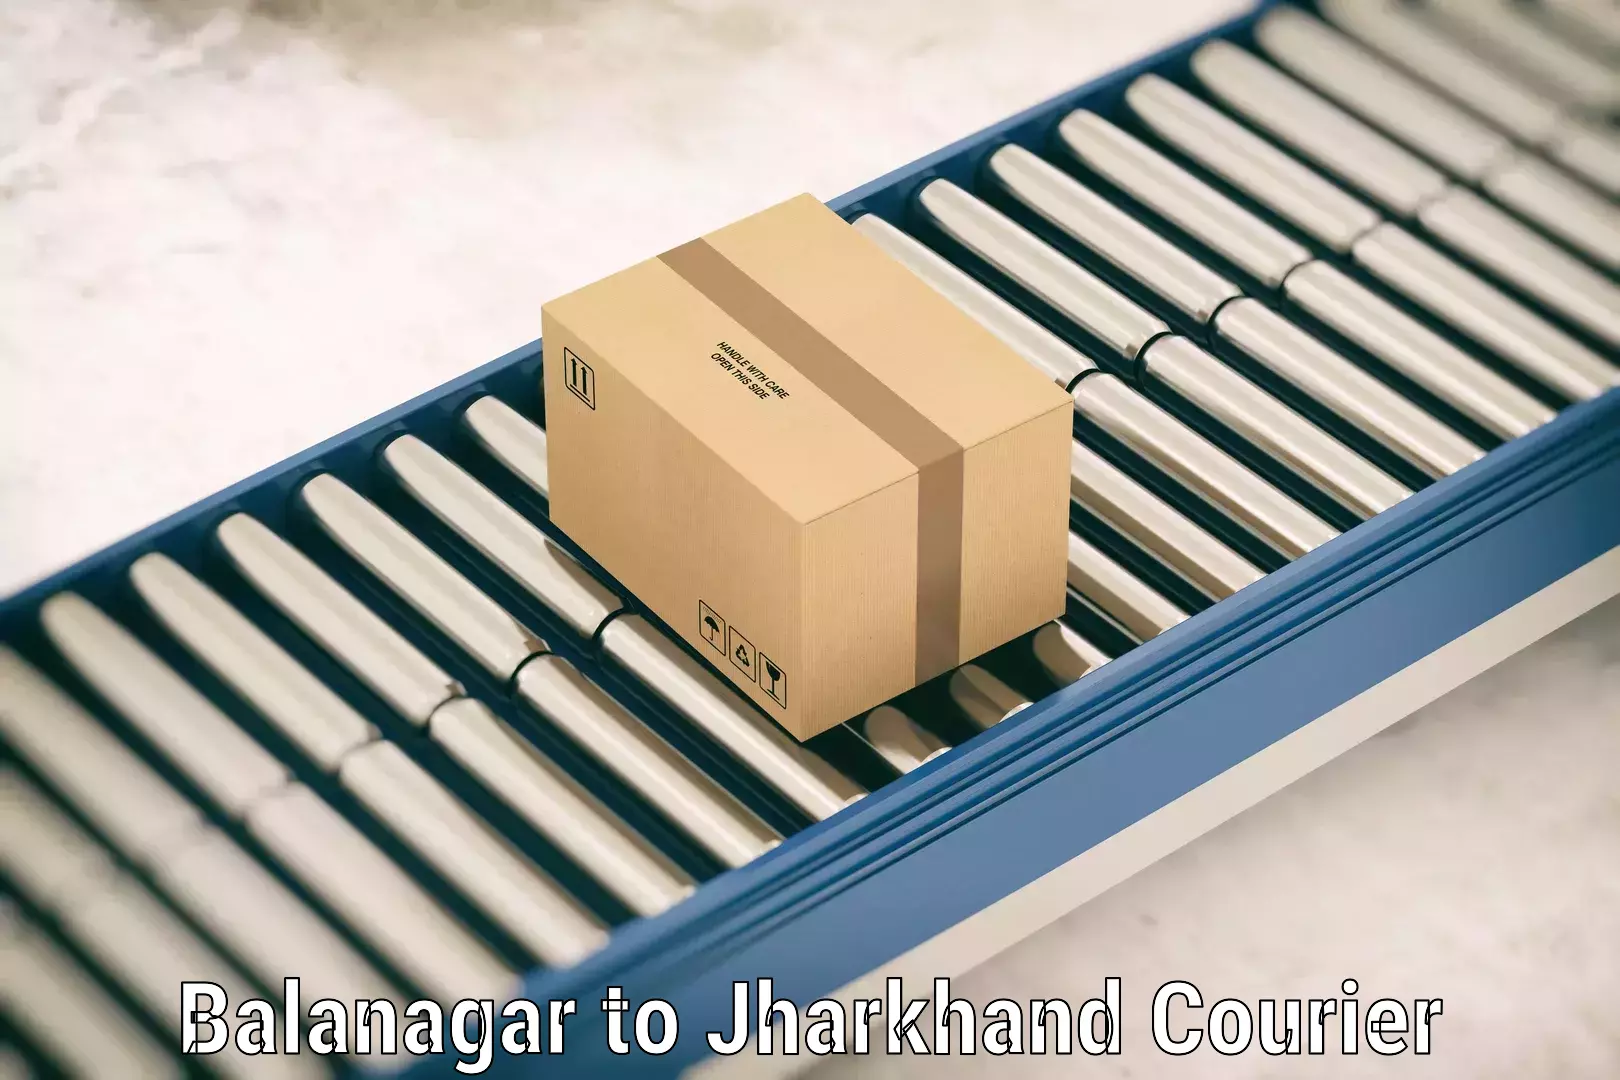 Instant baggage transport quote Balanagar to Ranchi